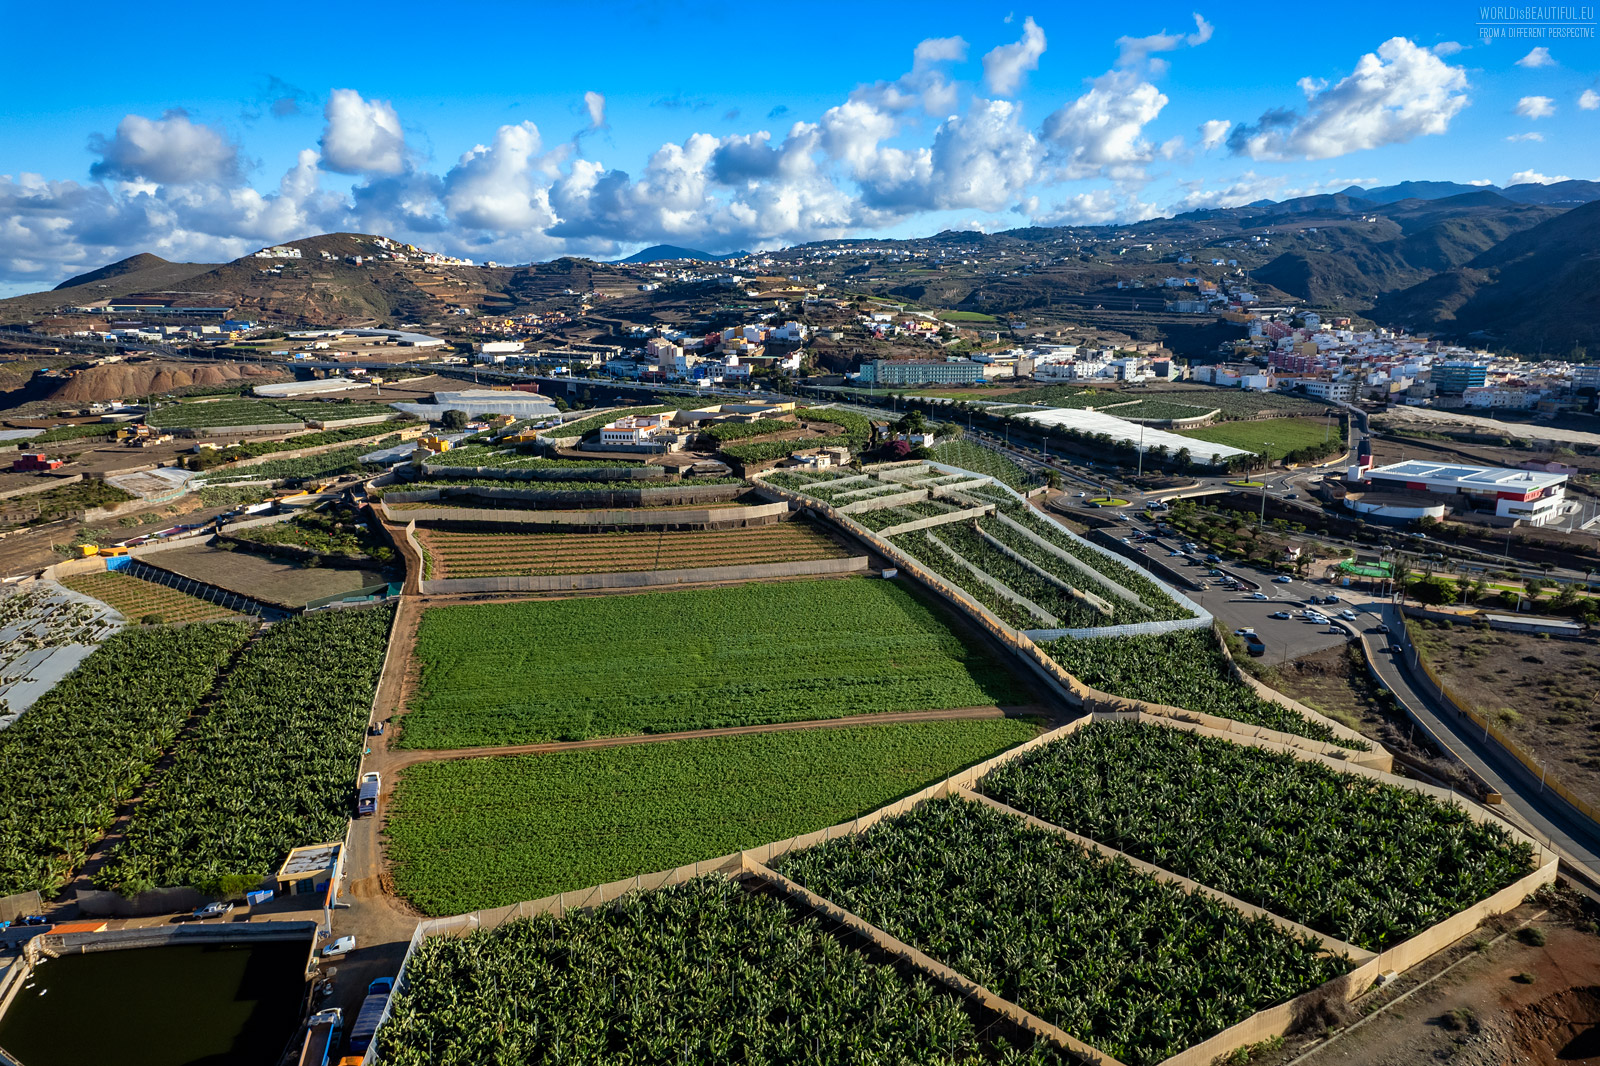 Banana plantations in the Canary Islands